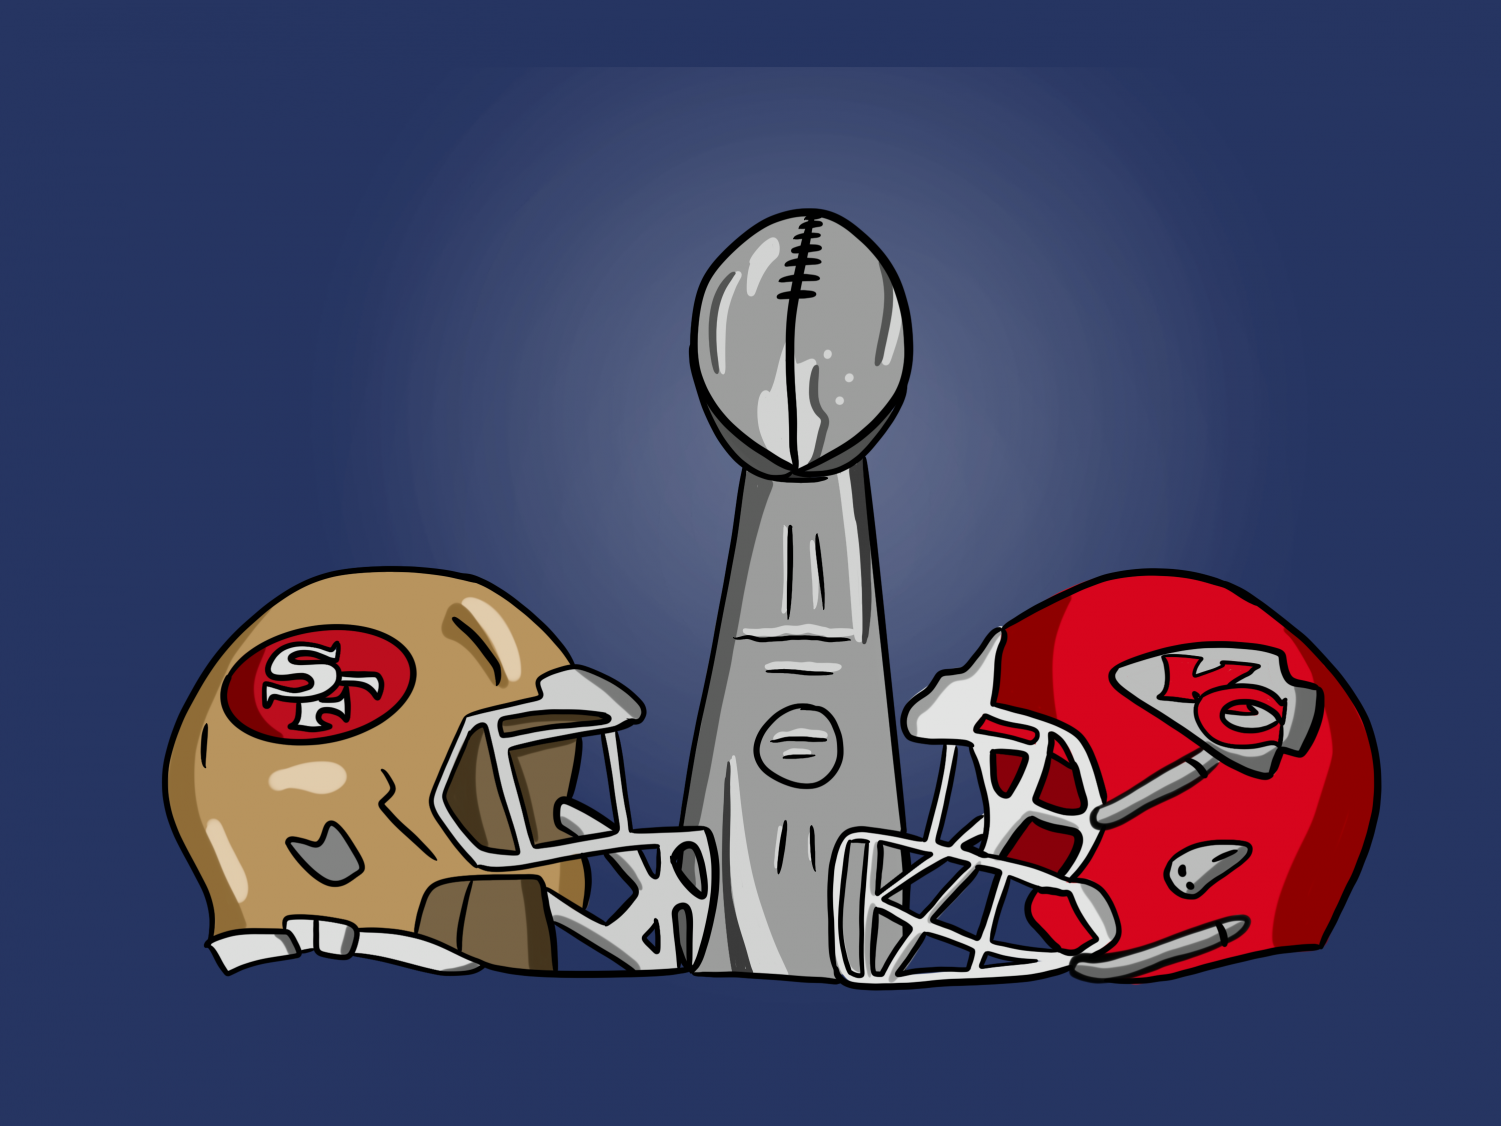 kc vs 49ers super bowl